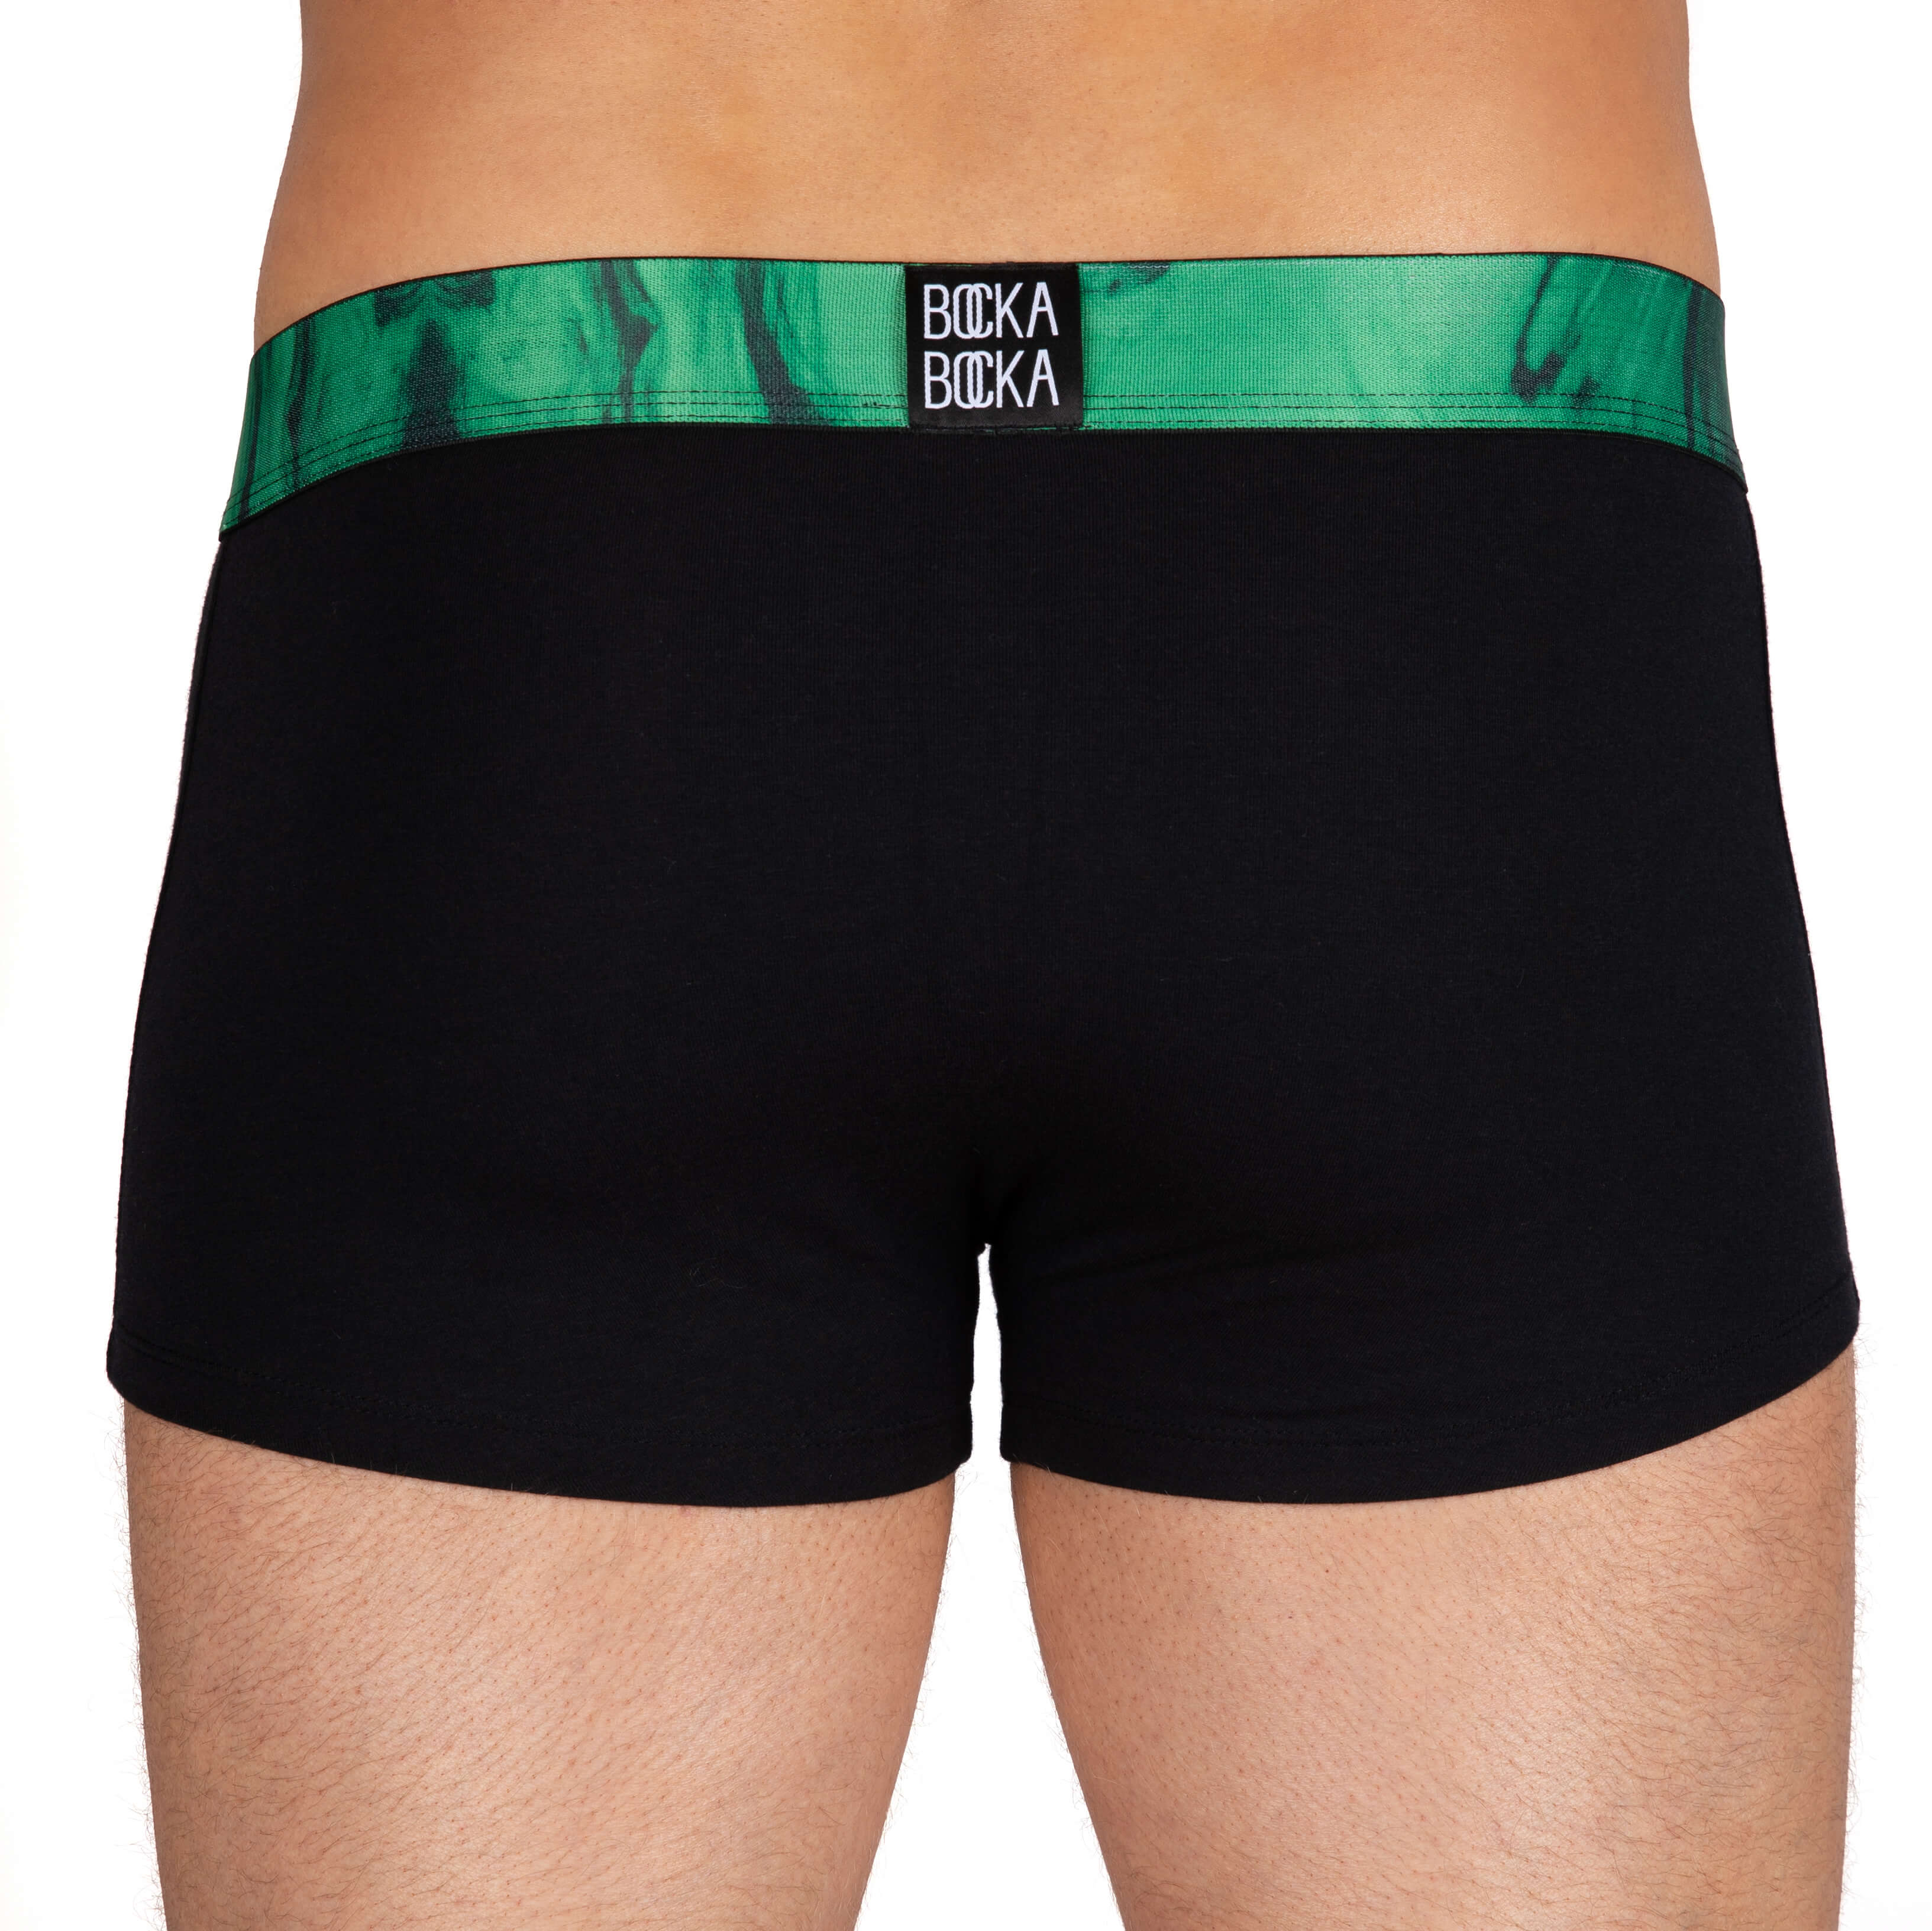 Mens Designer Underwear Trunks, Green and Black